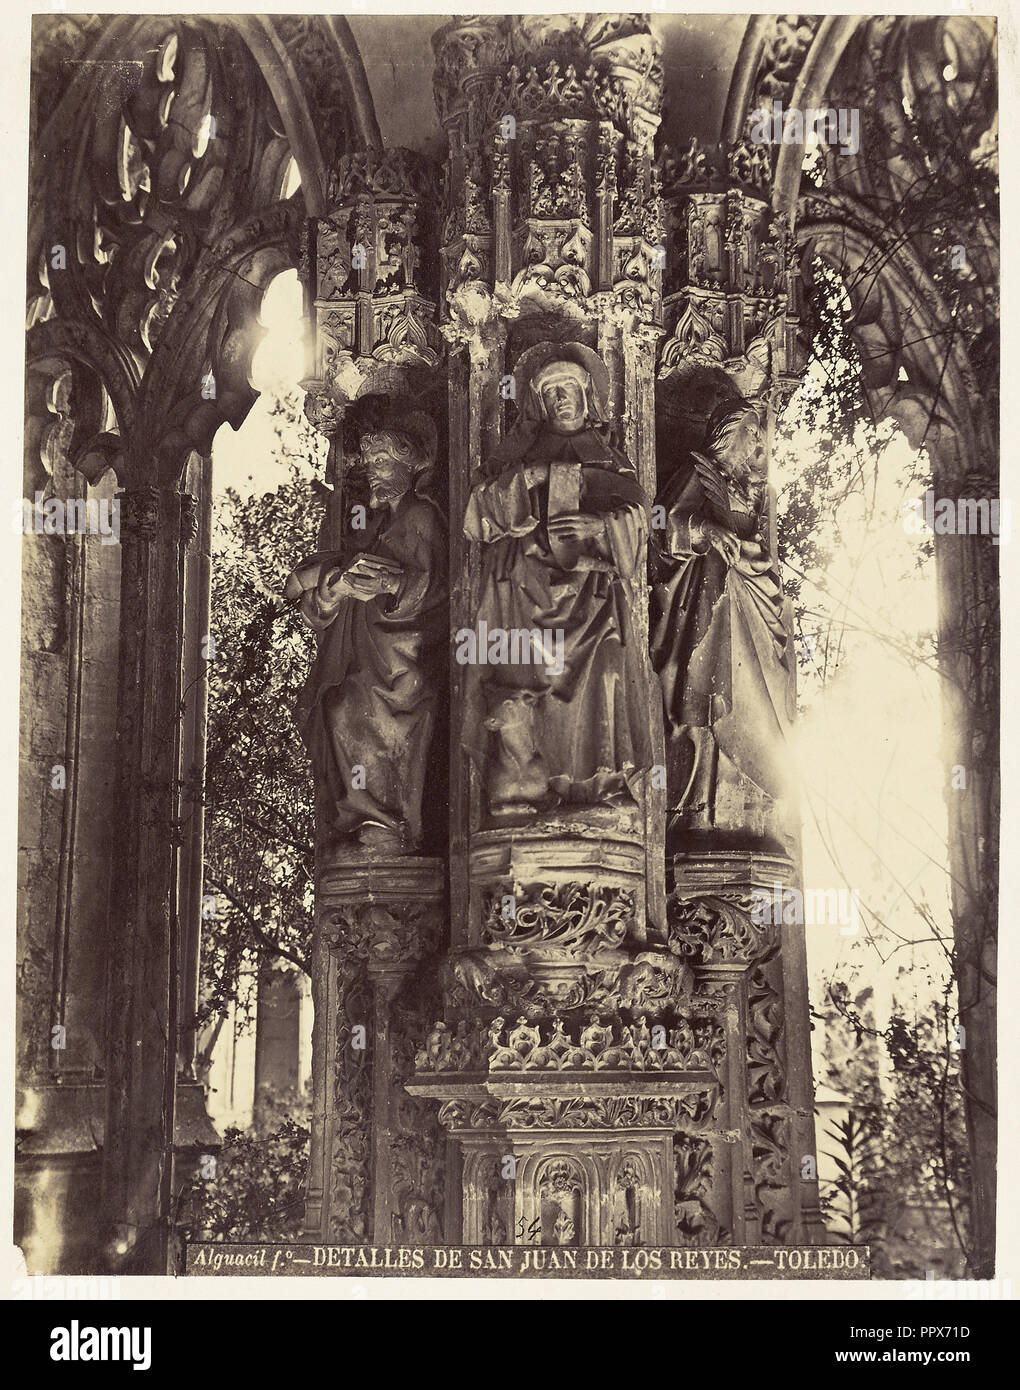 Detalles de San Juan de los Reyes, Toledo; Casiano Alguacil, Spanish, 1832 - 1914, Toledo, Spain; 1875; Albumen silver print Stock Photo